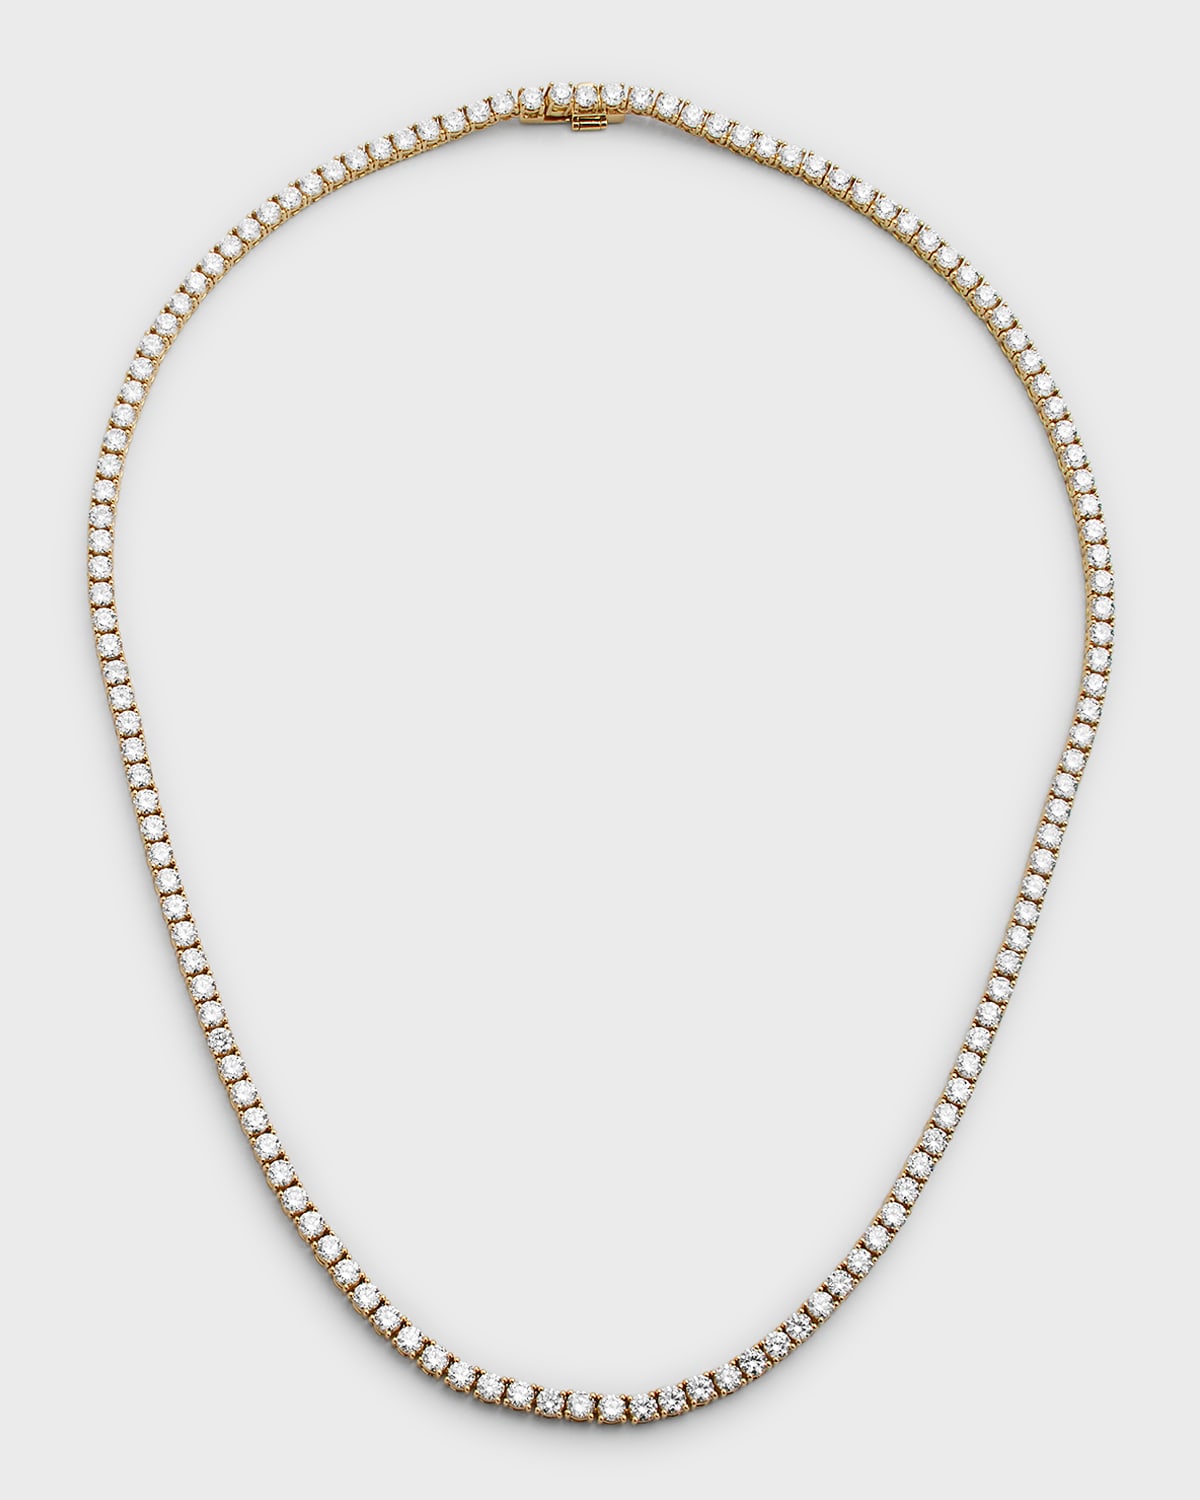 Neiman Marcus Diamonds 18k Yellow Gold Diamond Tennis Necklace, 14.18 Ct.